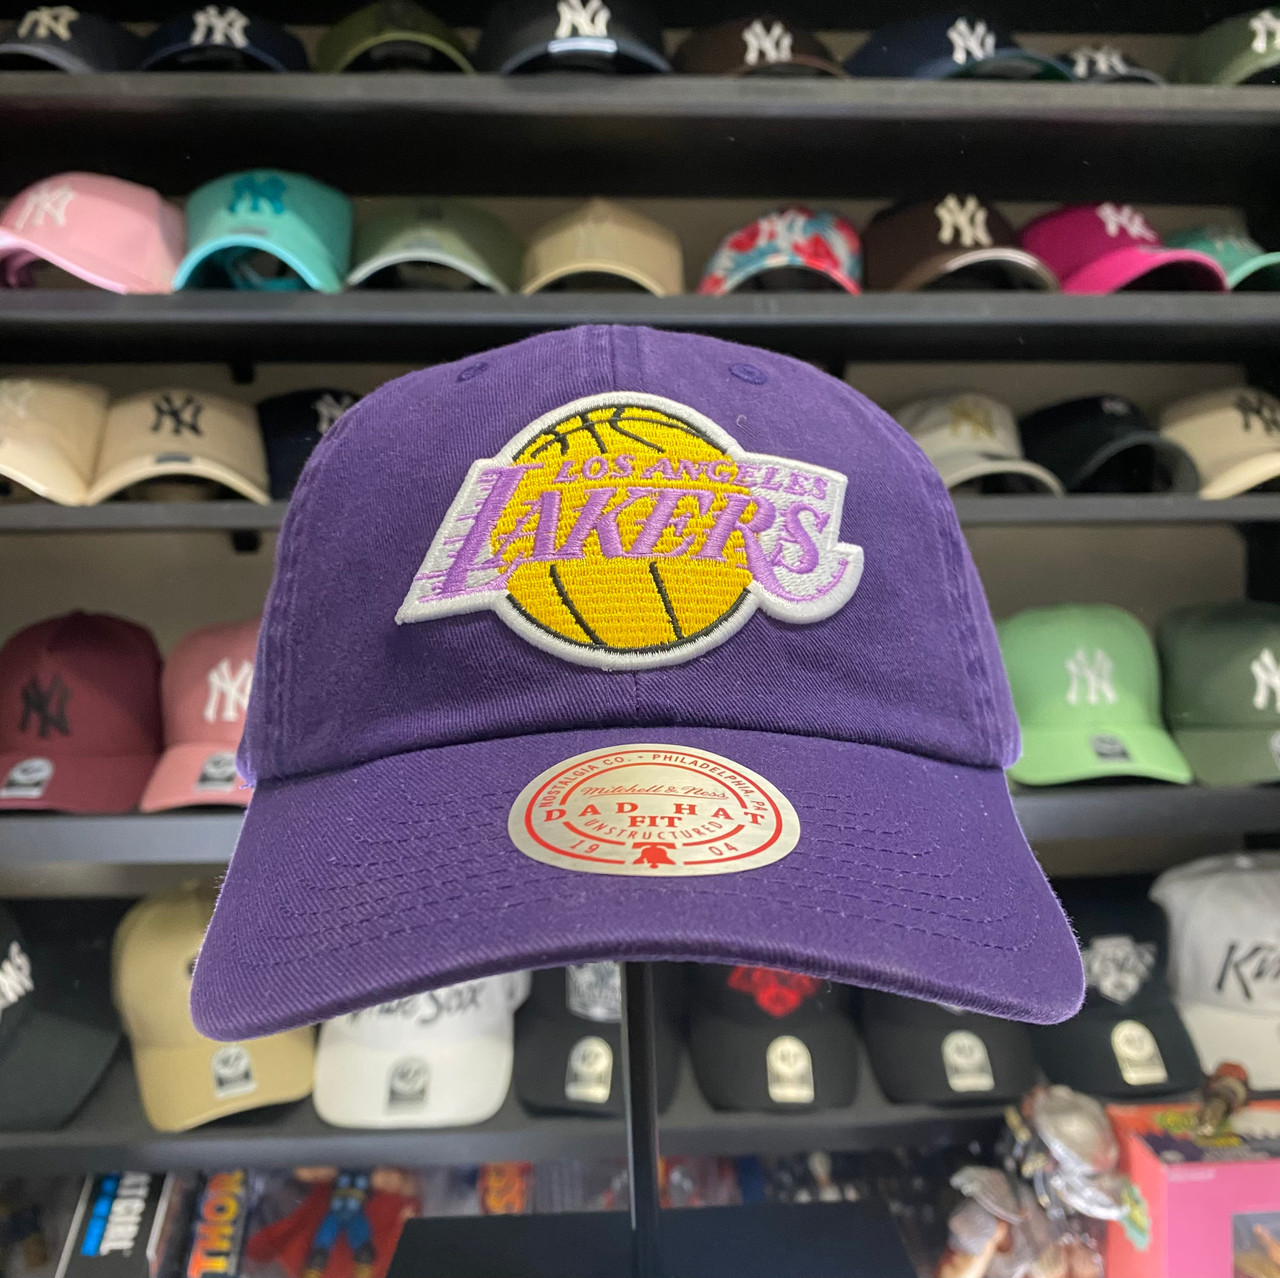 Los Angeles Lakers Purple Mitchell & Ness Snapback Hat